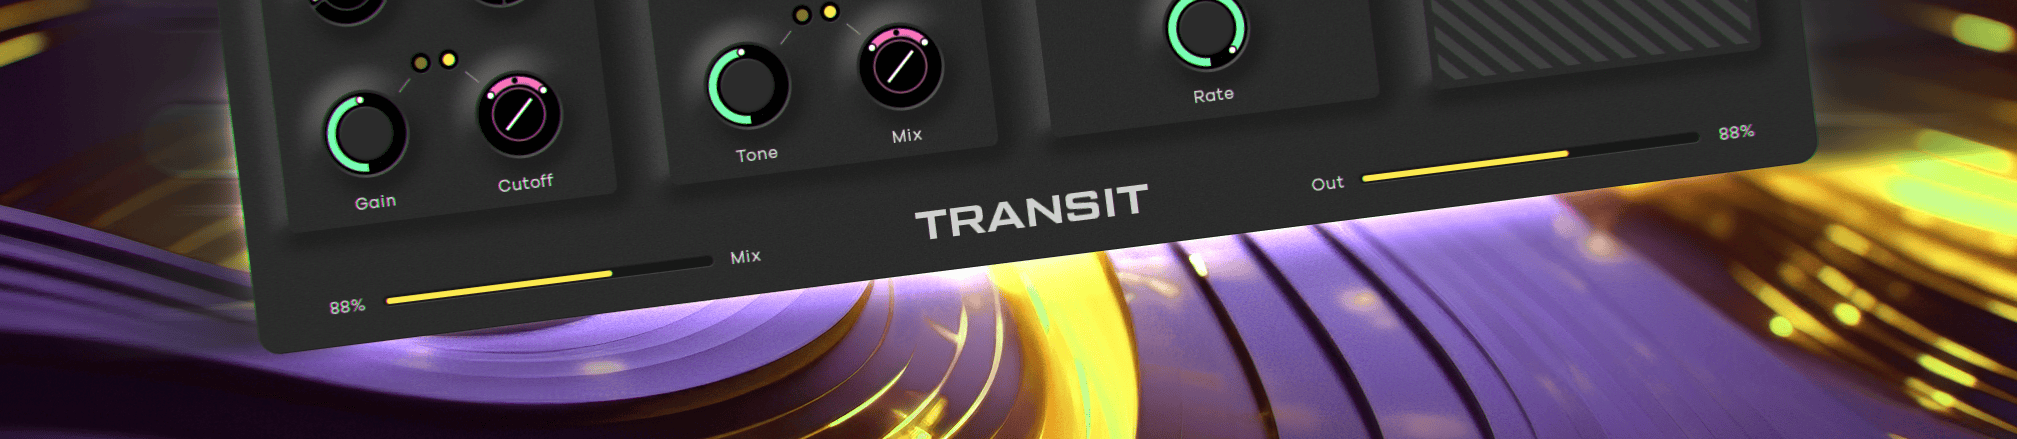 Andrew Huang x Baby Audio Transit Plugin Promo Banner The Ultimate Transition Designer VST